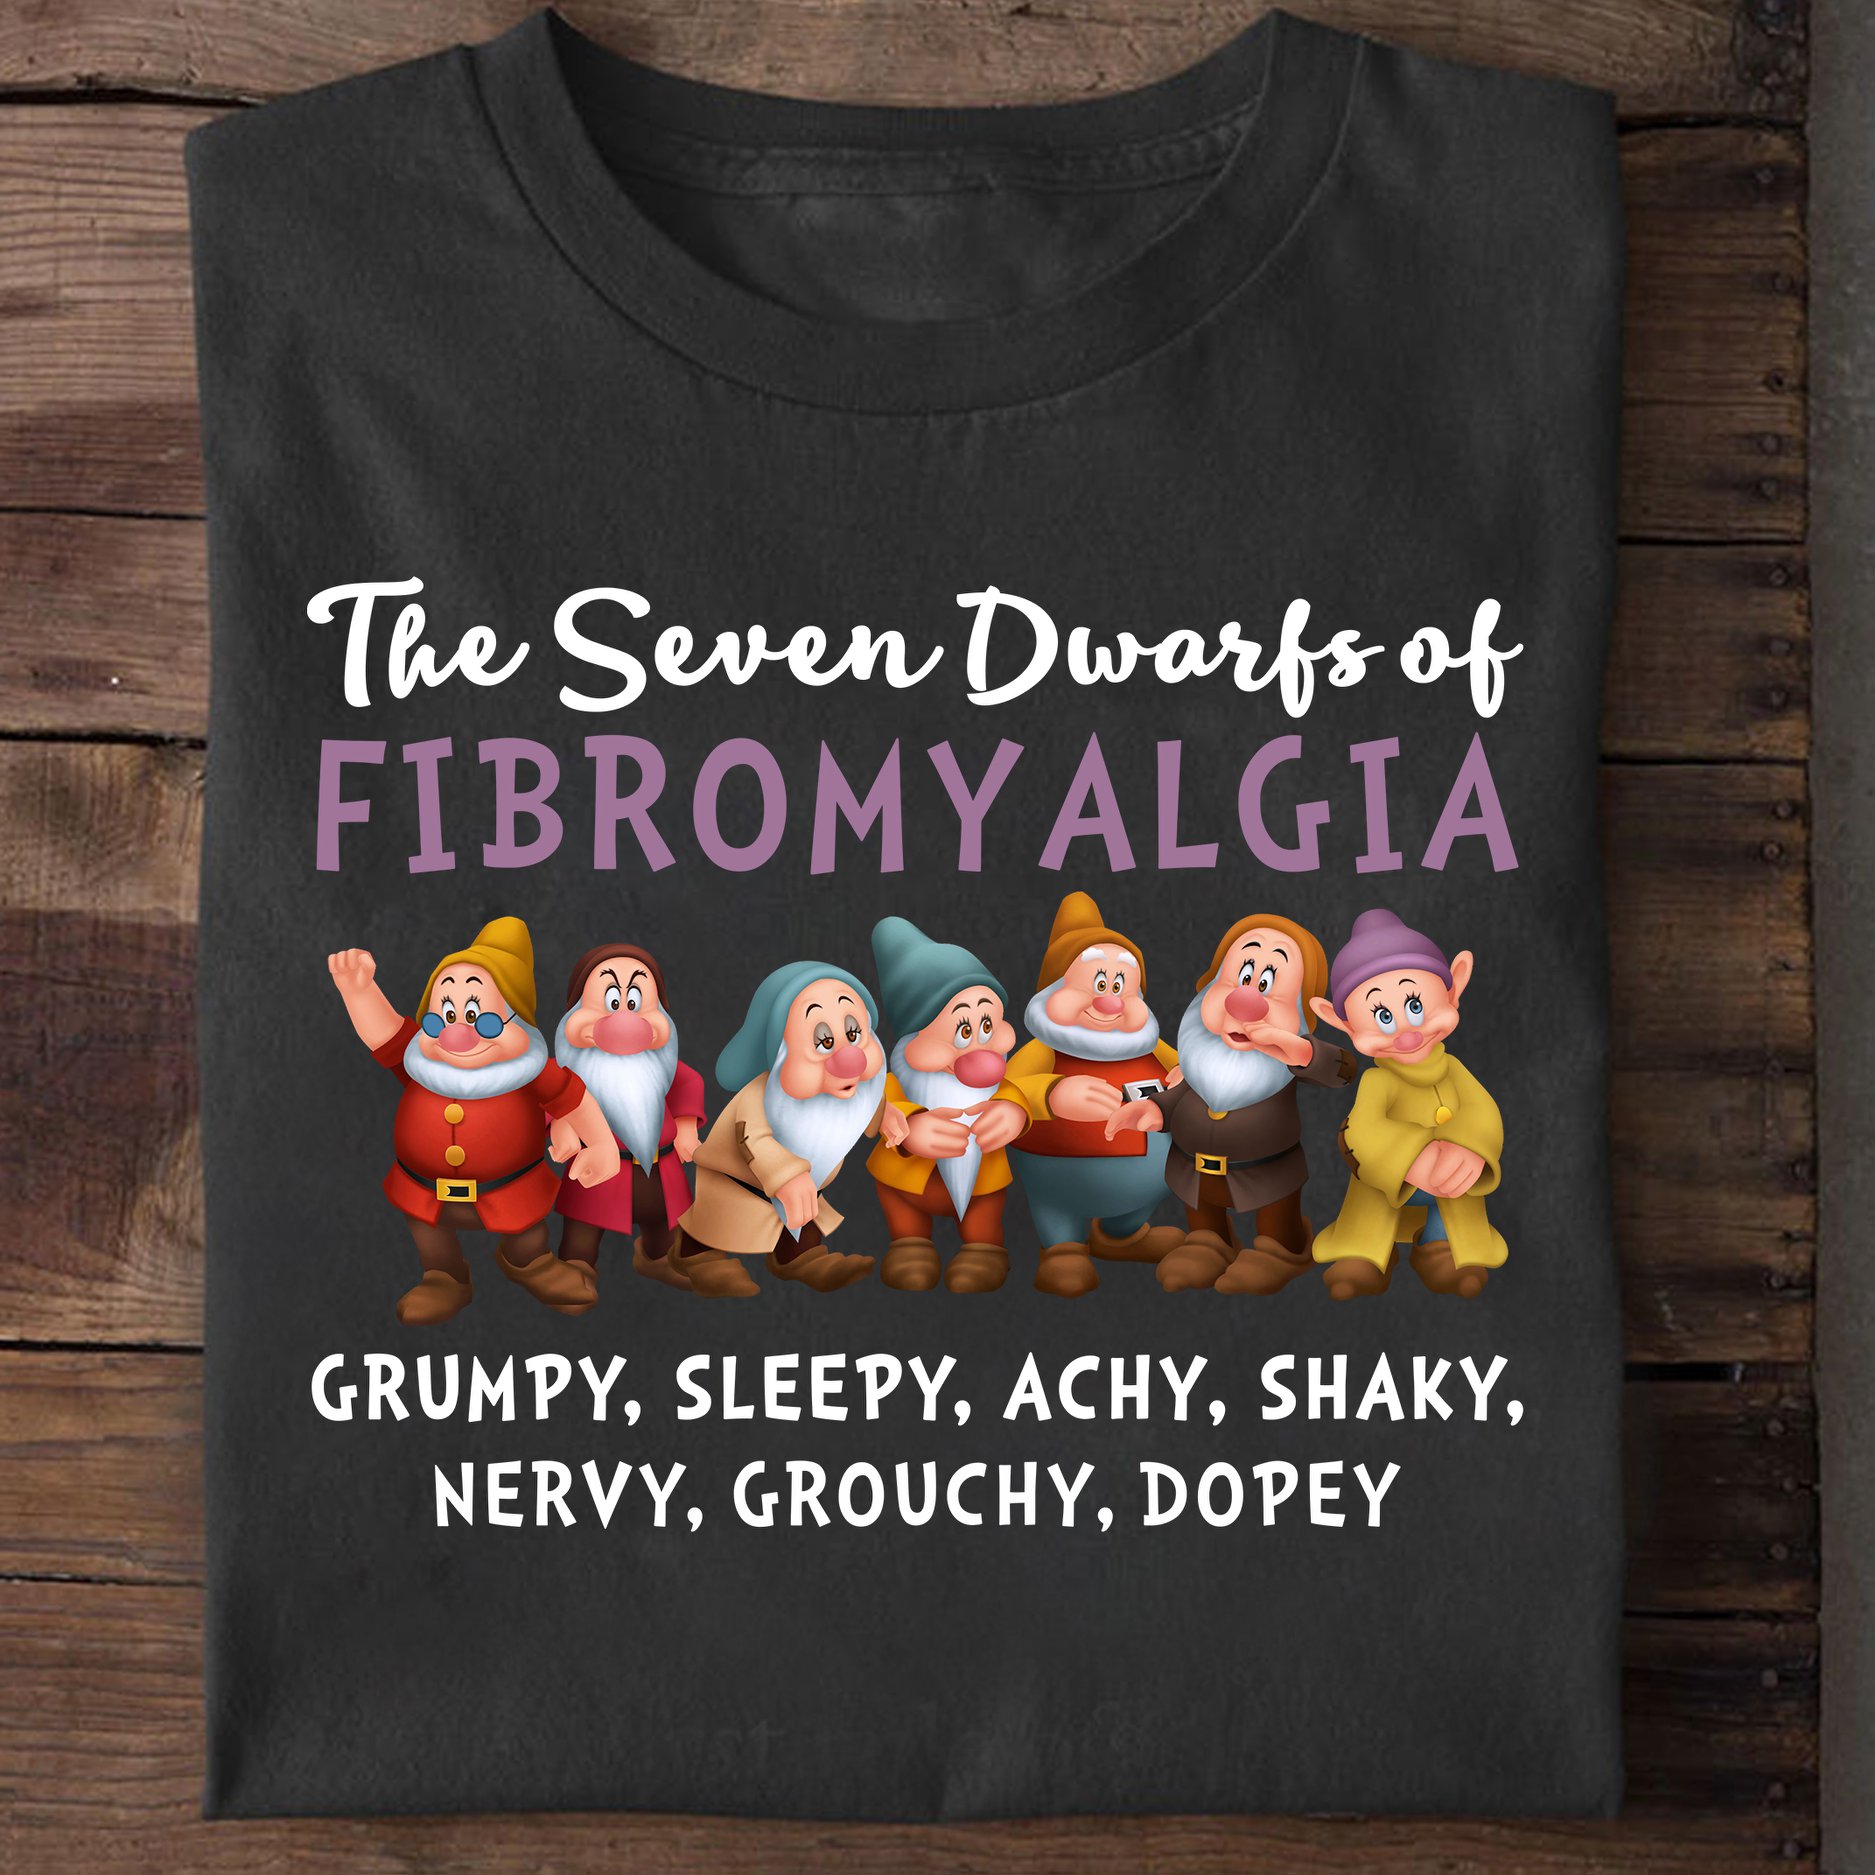 The seven dwarfs of Fibromyalgia - Grumpy, sleepy, achy, shaky, nervy, grouchy, dopey